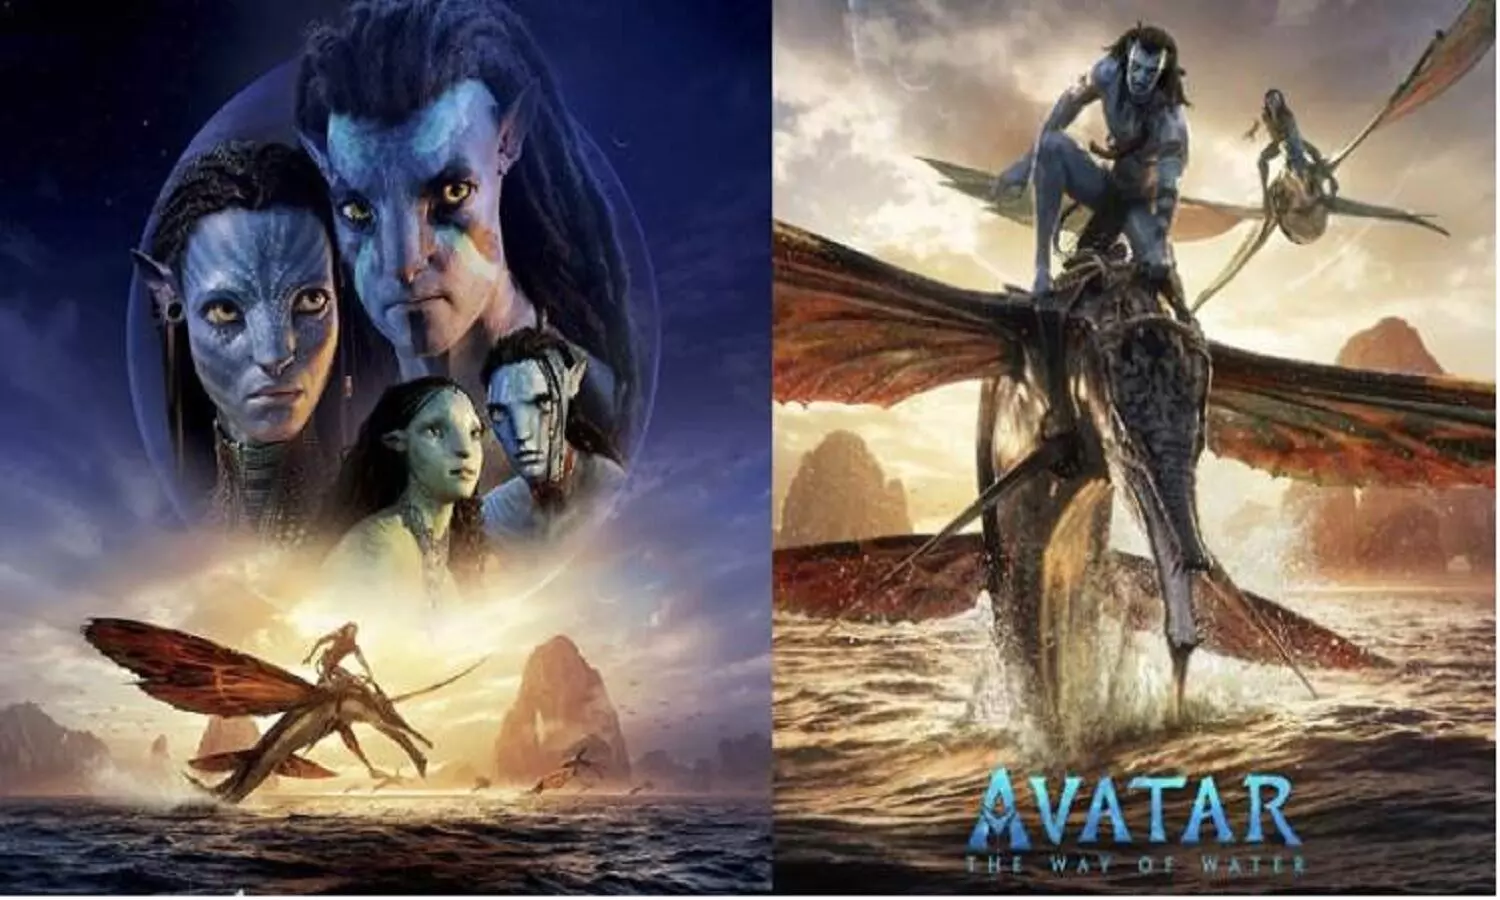 Avatar 2 First Day Collection: अवतार द वे ऑफ़ वॉटर ने पहले दिन कितना कलेक्शन किया?